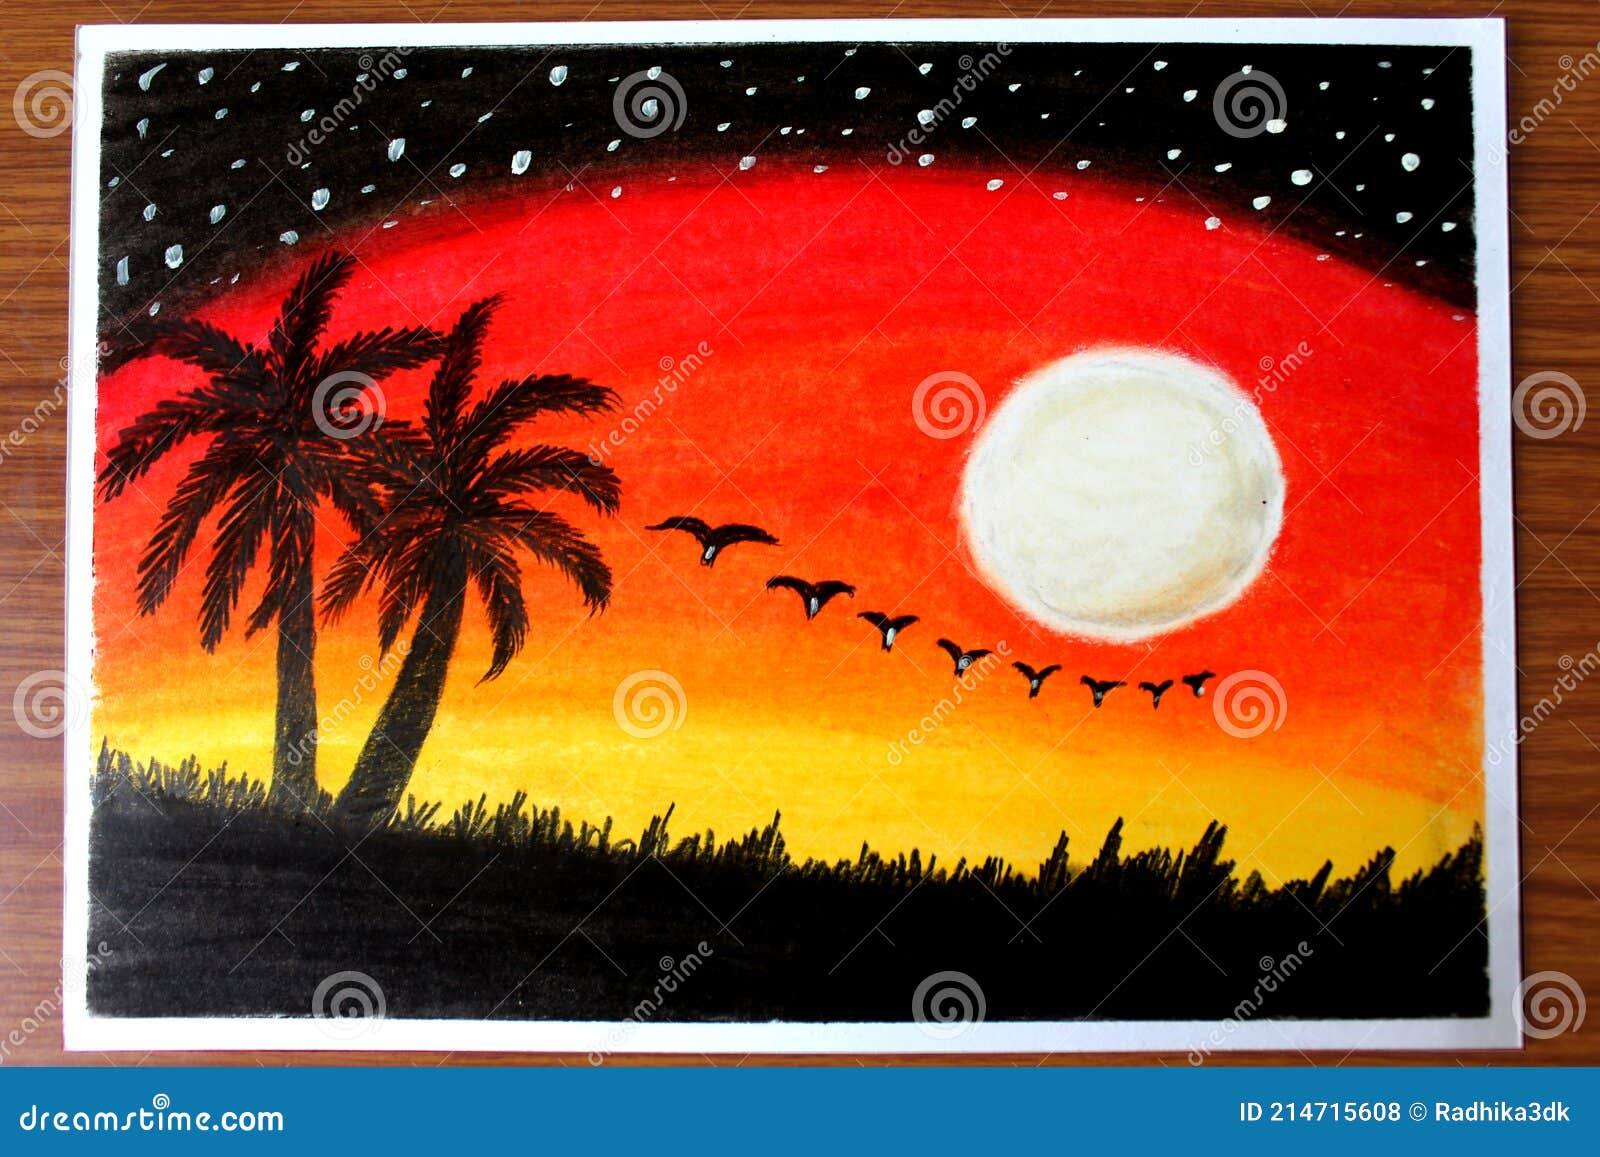 Sunset scenery Drawing stock photo Image of beauty  214715608